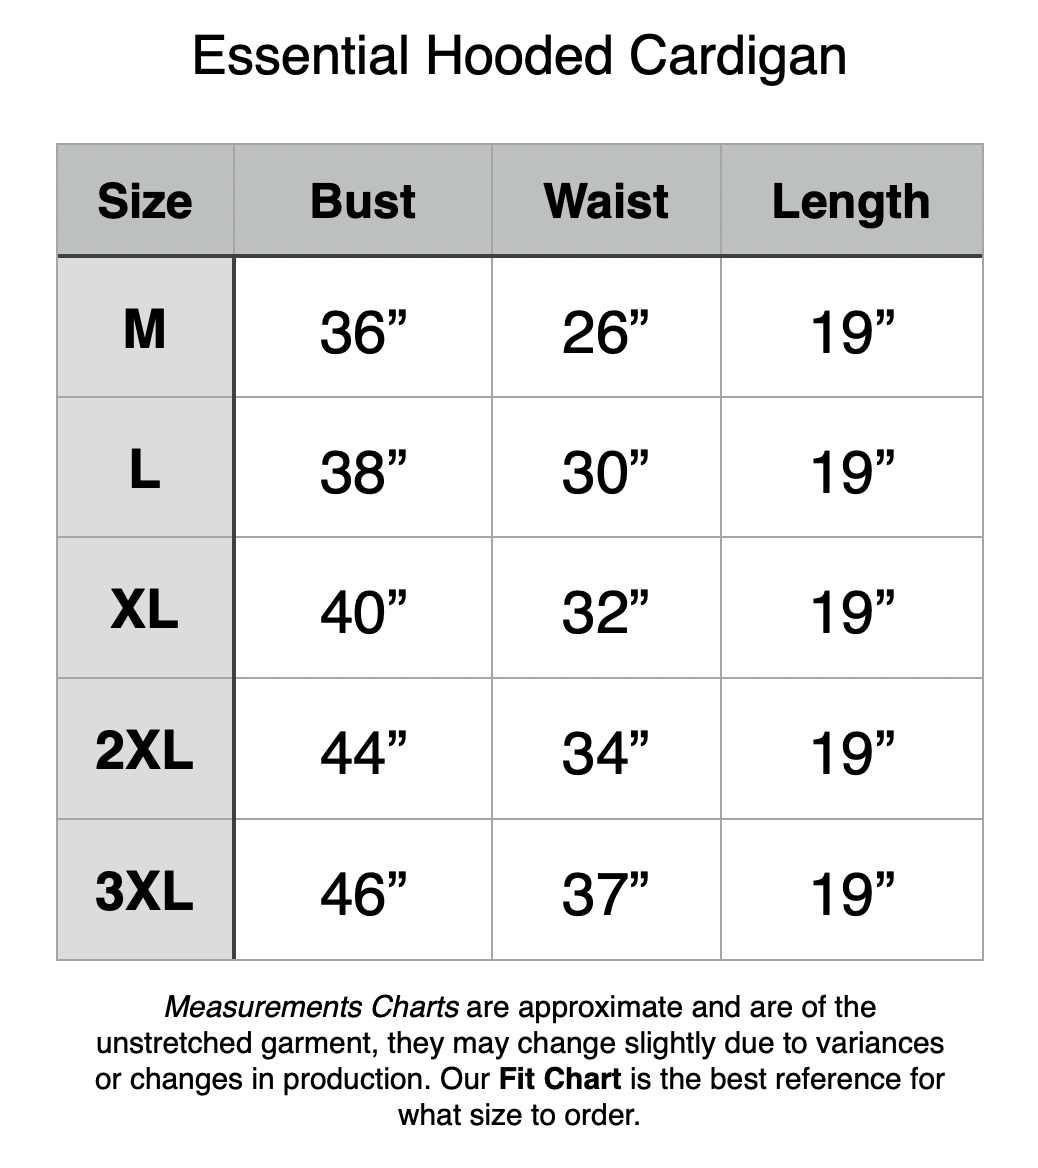 Essential Hooded Cardigan - M - 36” Bust, 26” Waist, 19” Length. L - 38” Bust, 30” Waist, 19” Length. XL - 40” Bust, 32” Waist, 19” Length. 2XL - 44” Bust, 34” Waist, 19” Length. 3XL - 46” Bust, 37” Waist, 19” Length.